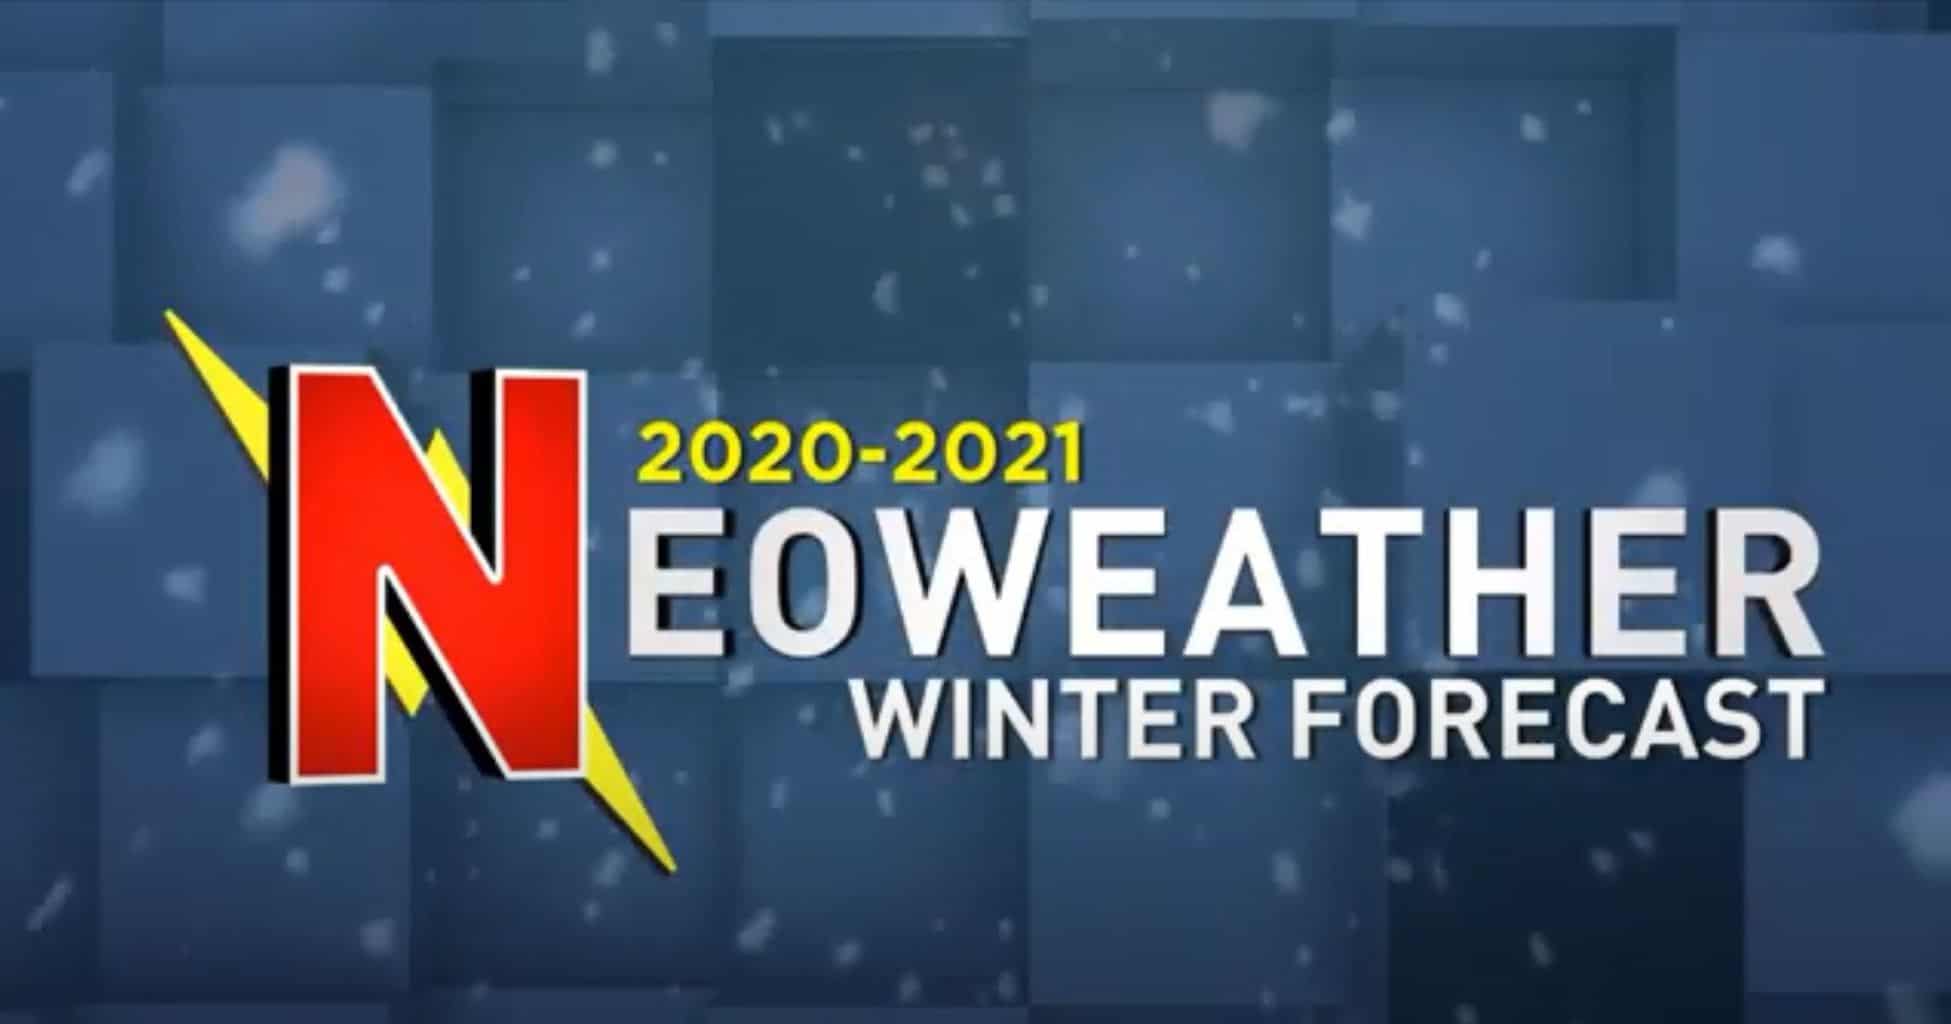 2020-2021 Winter Forecast Card